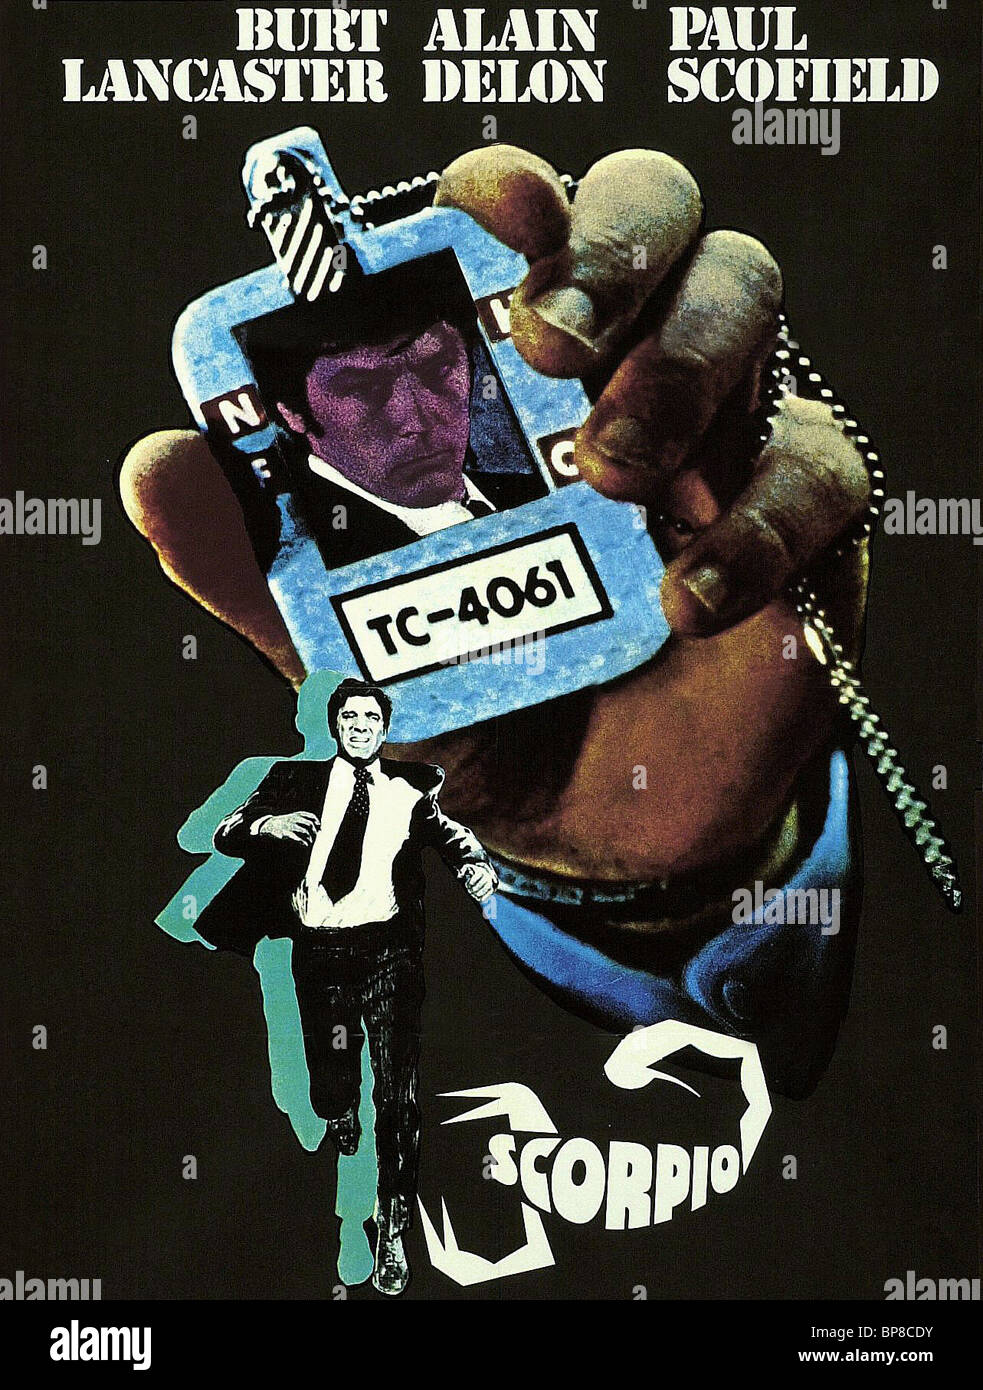 Scorpio Burt Lancaster vintage movie poster